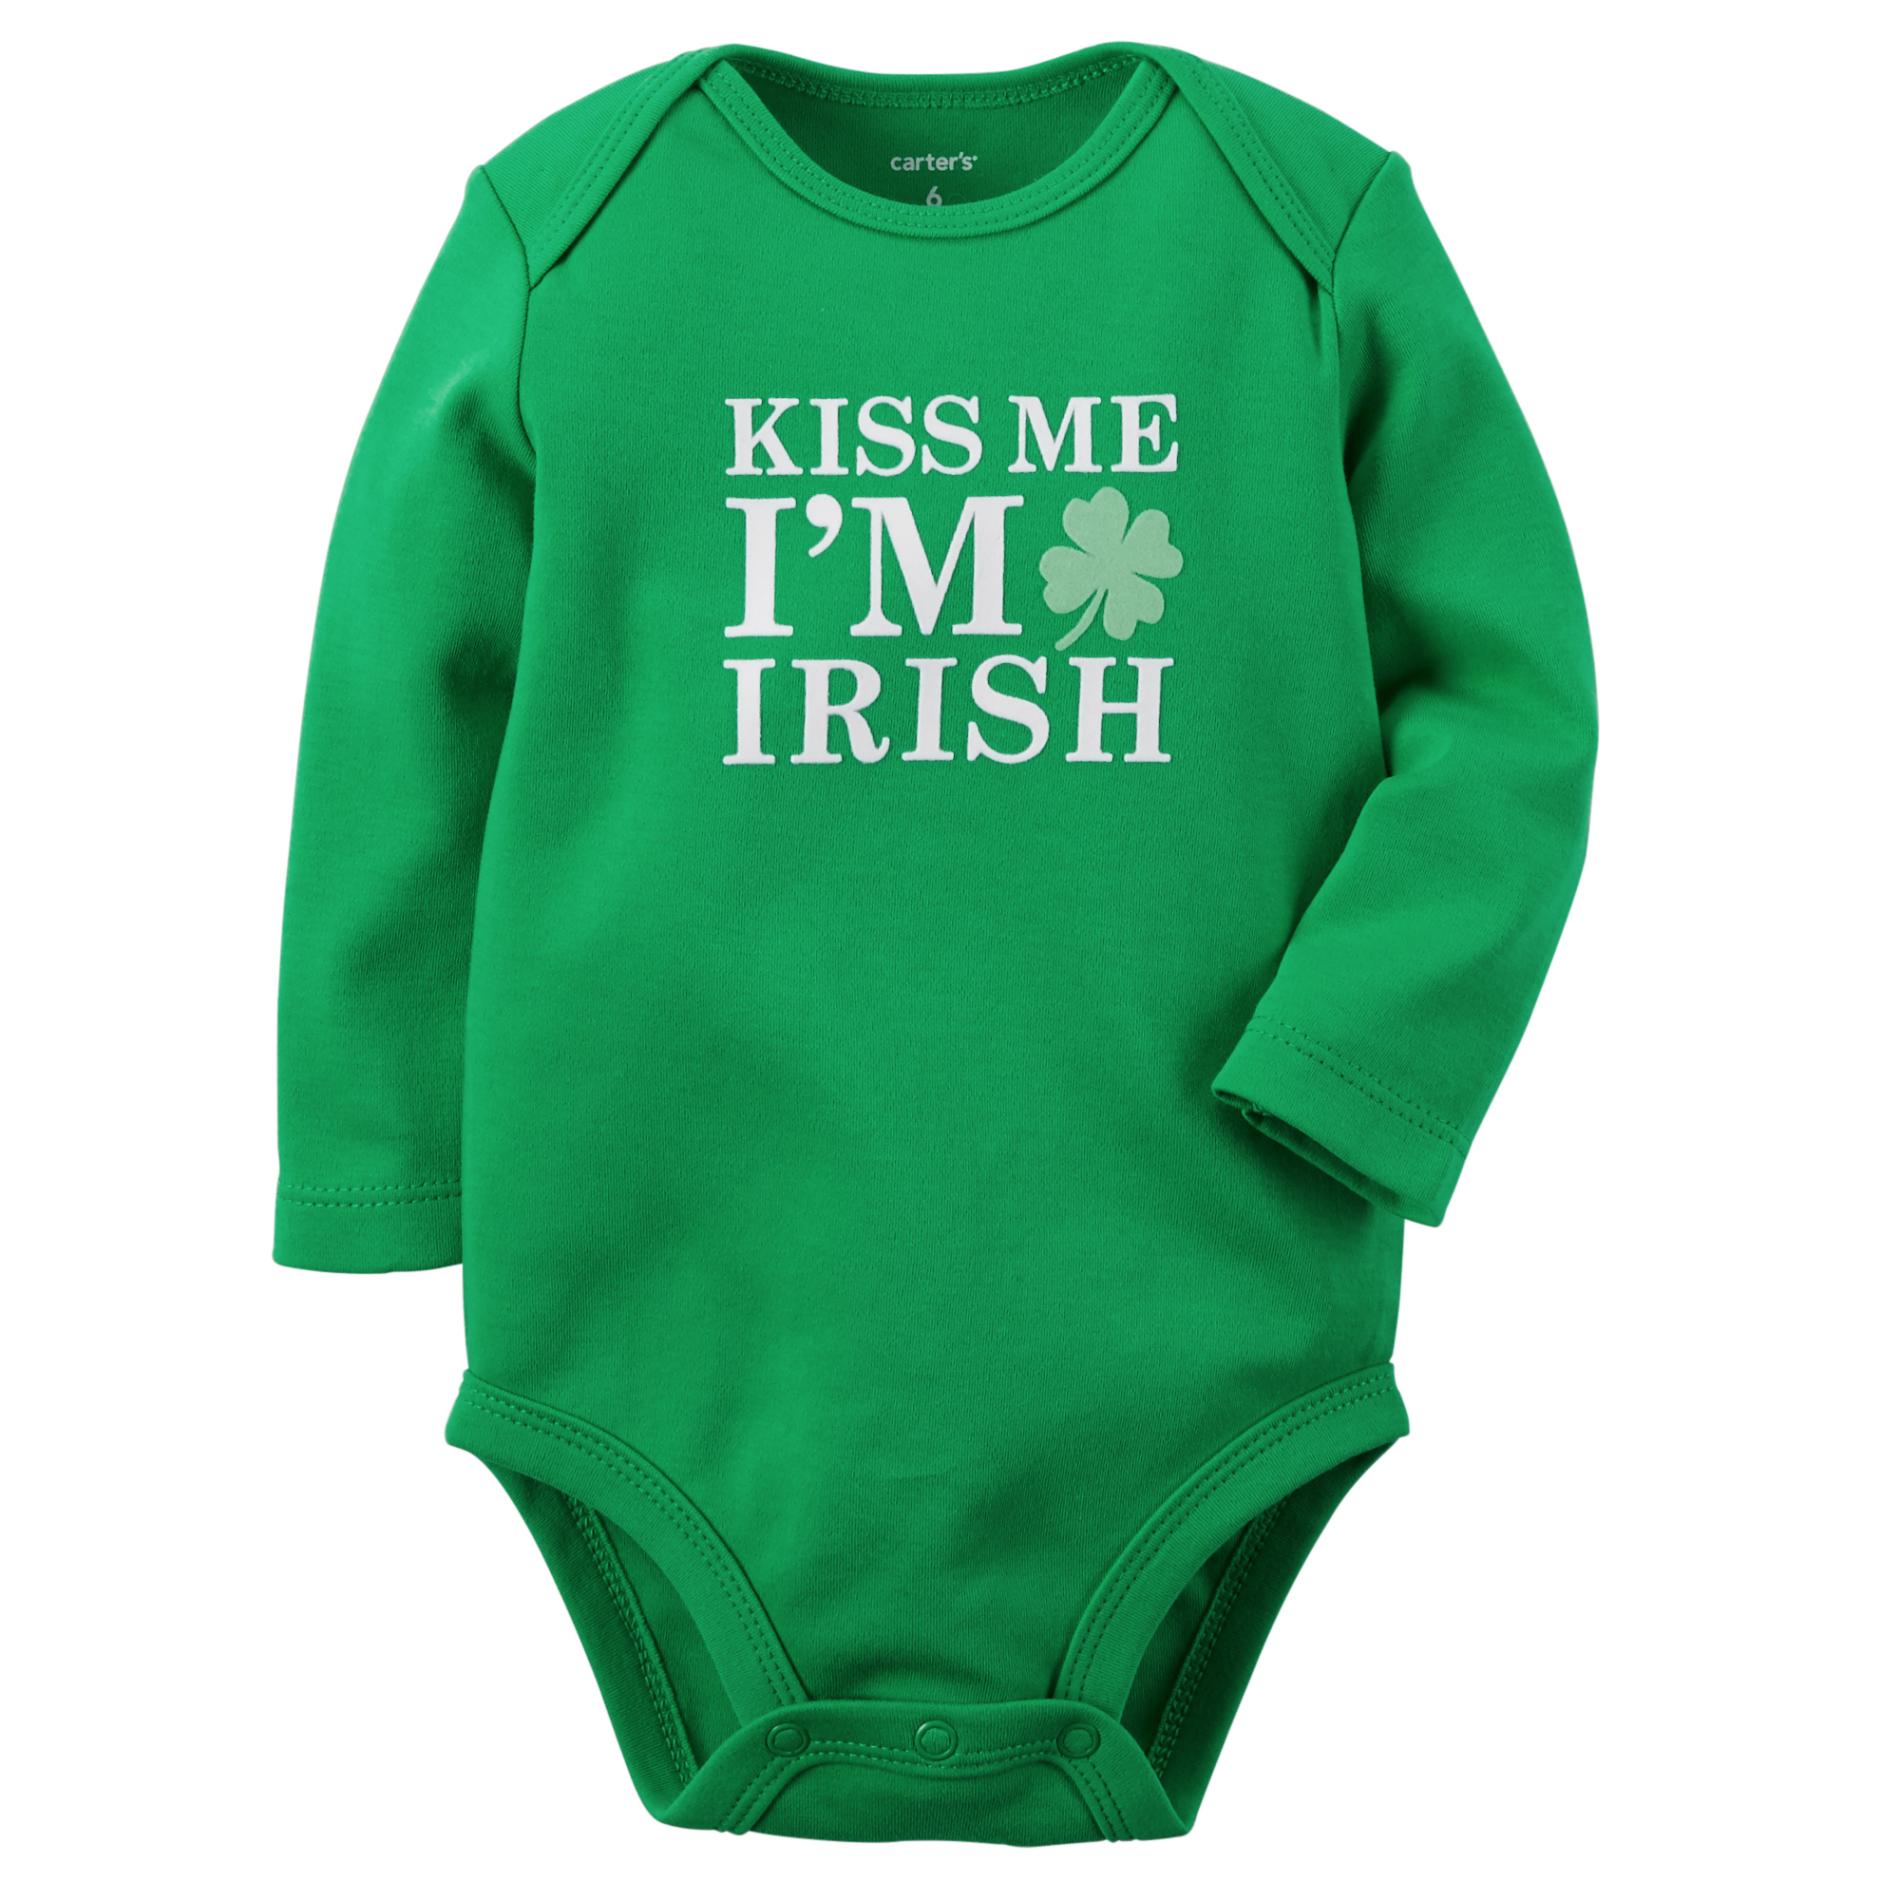 Carter's Newborn & Infant's St. Patrick's Day Bodysuit